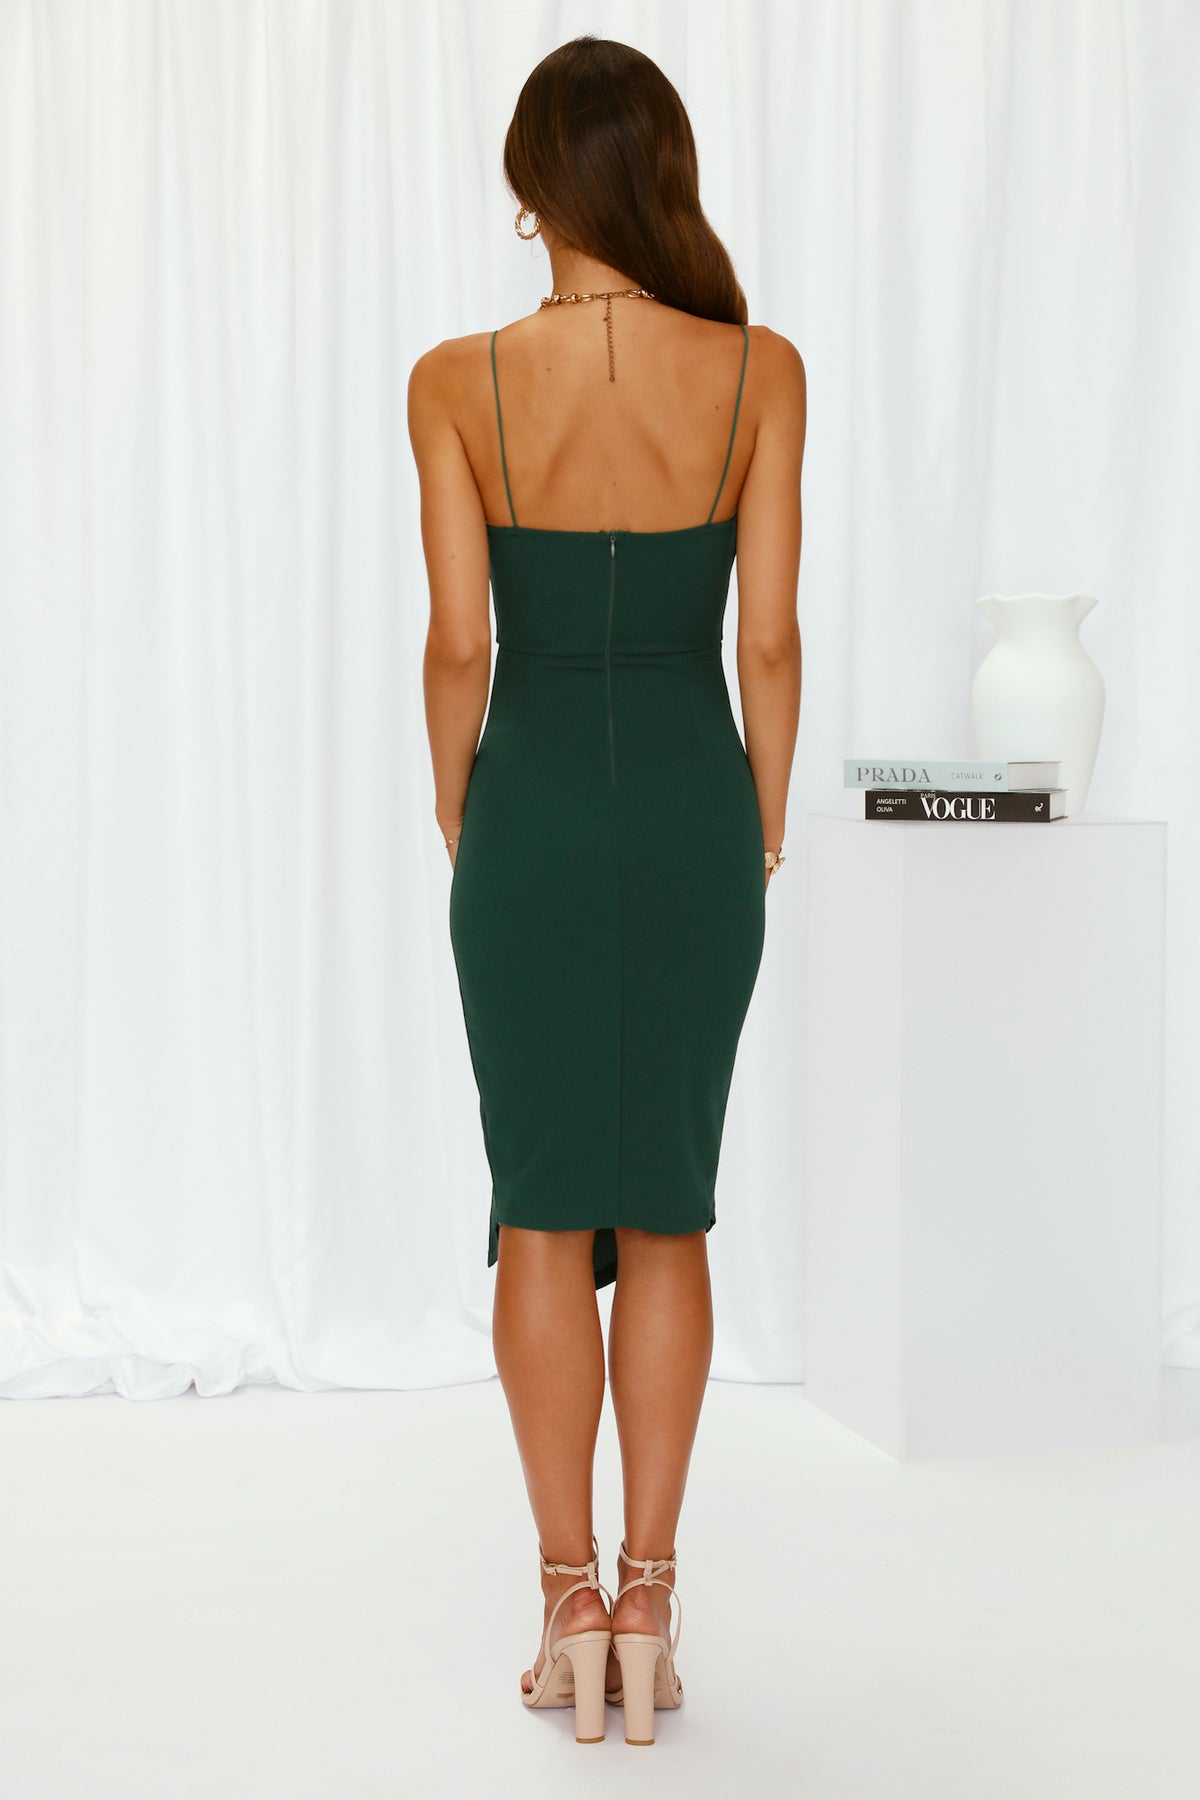 Shop Formal Dress - Outta Cash Midi Dress Dark Green fourth image